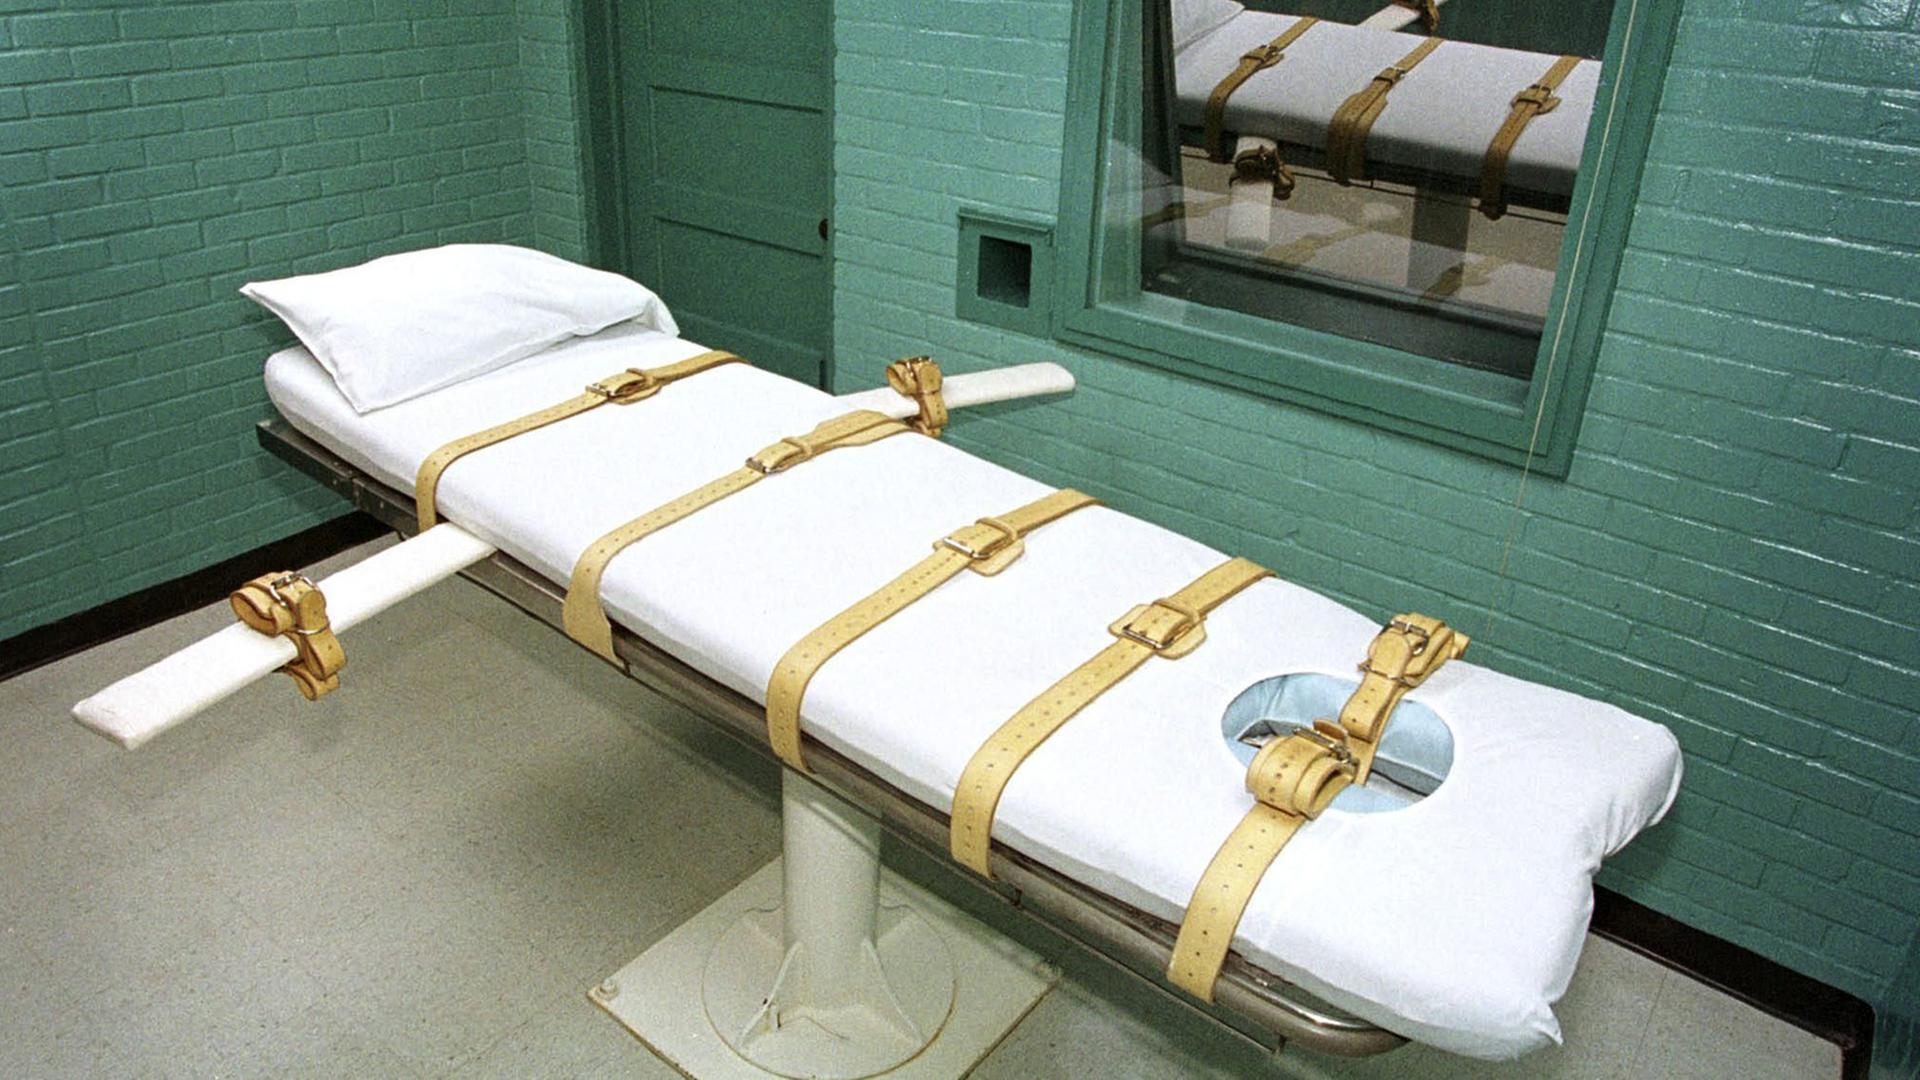 Todeszelle des berüchtigten Huntsville-Gefängnisses in Texas in den USA